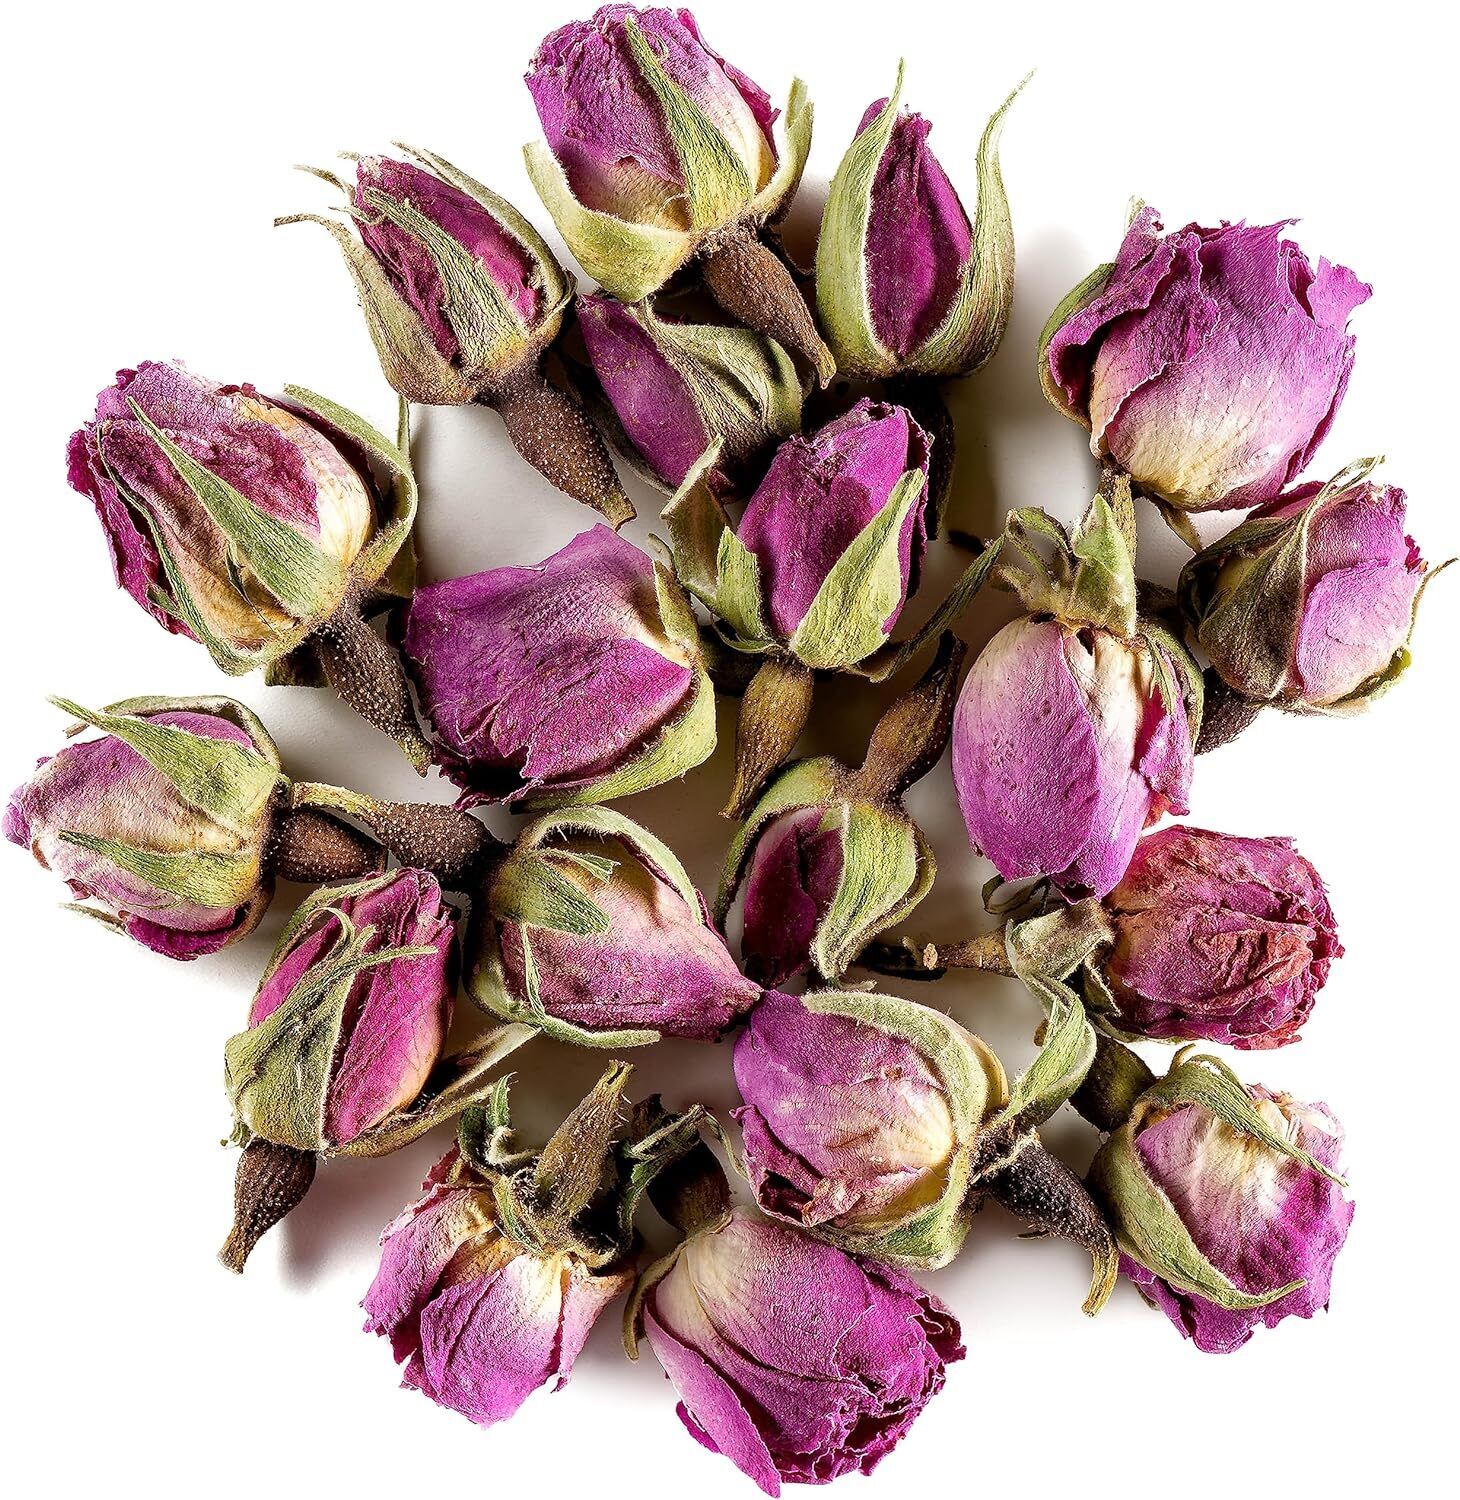 Damask Rose Bud Organic Quality - Dried Rosebud - Rosebud Edible Culinairy 50g